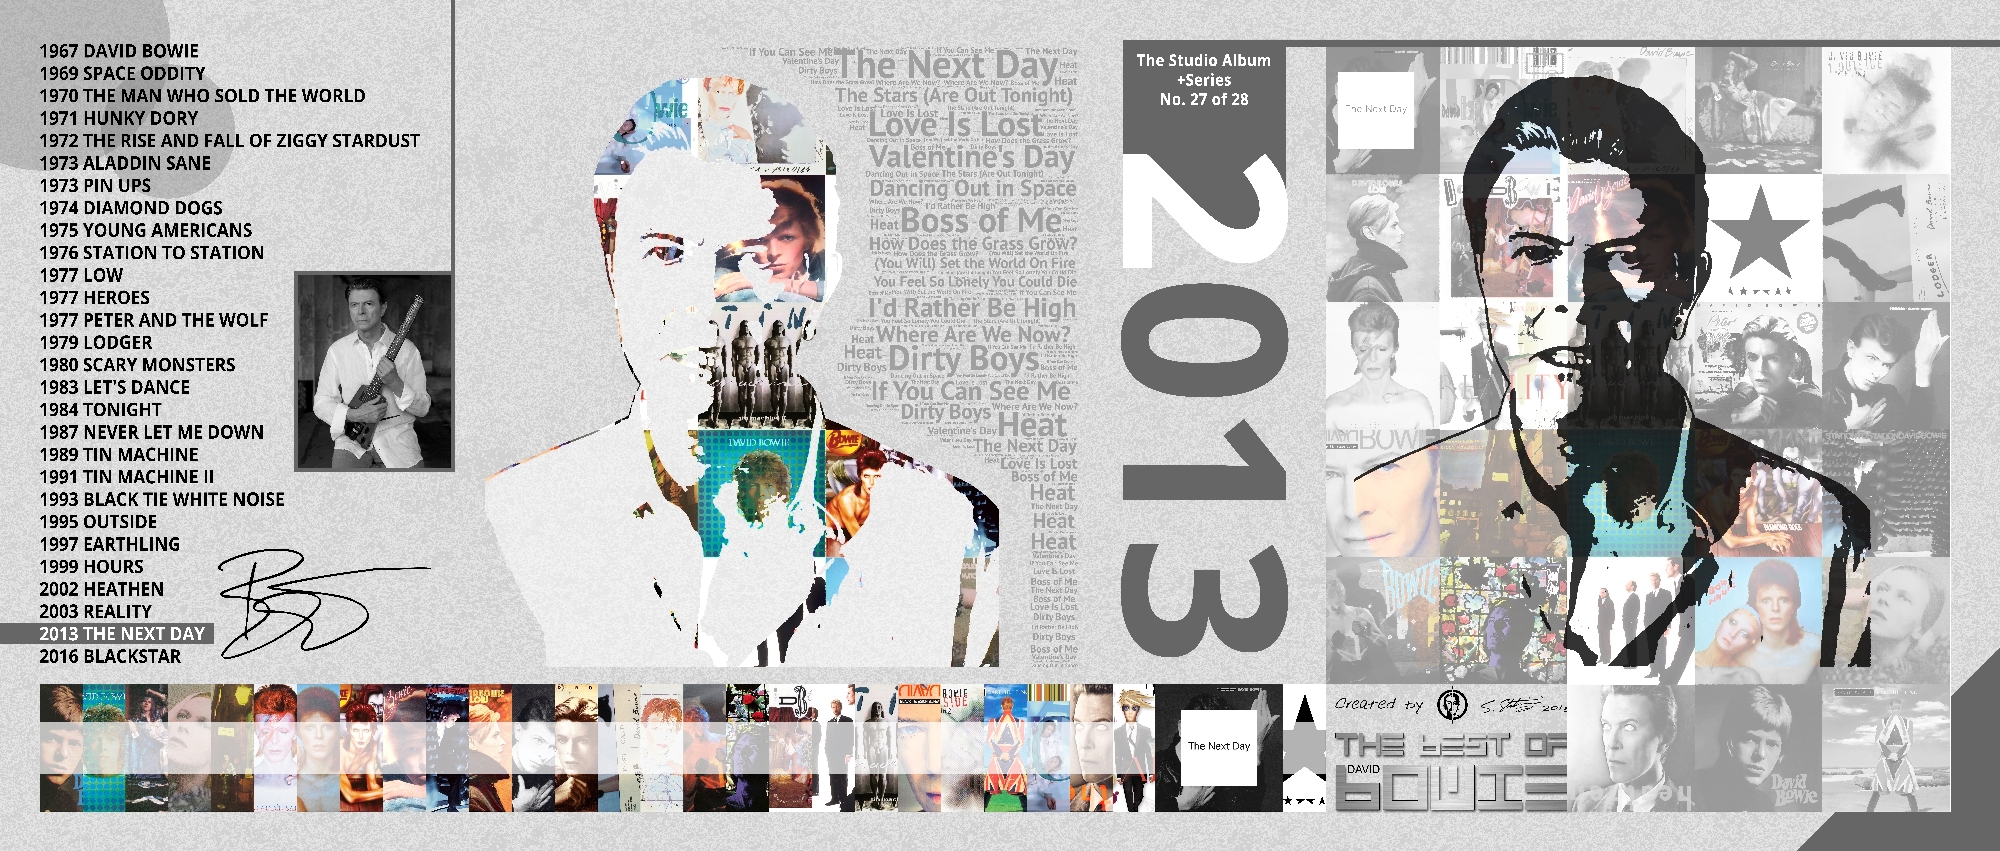 David Bowie Art Creation by Steve Stachini - 2013 The Next Day 162cm x 69cm